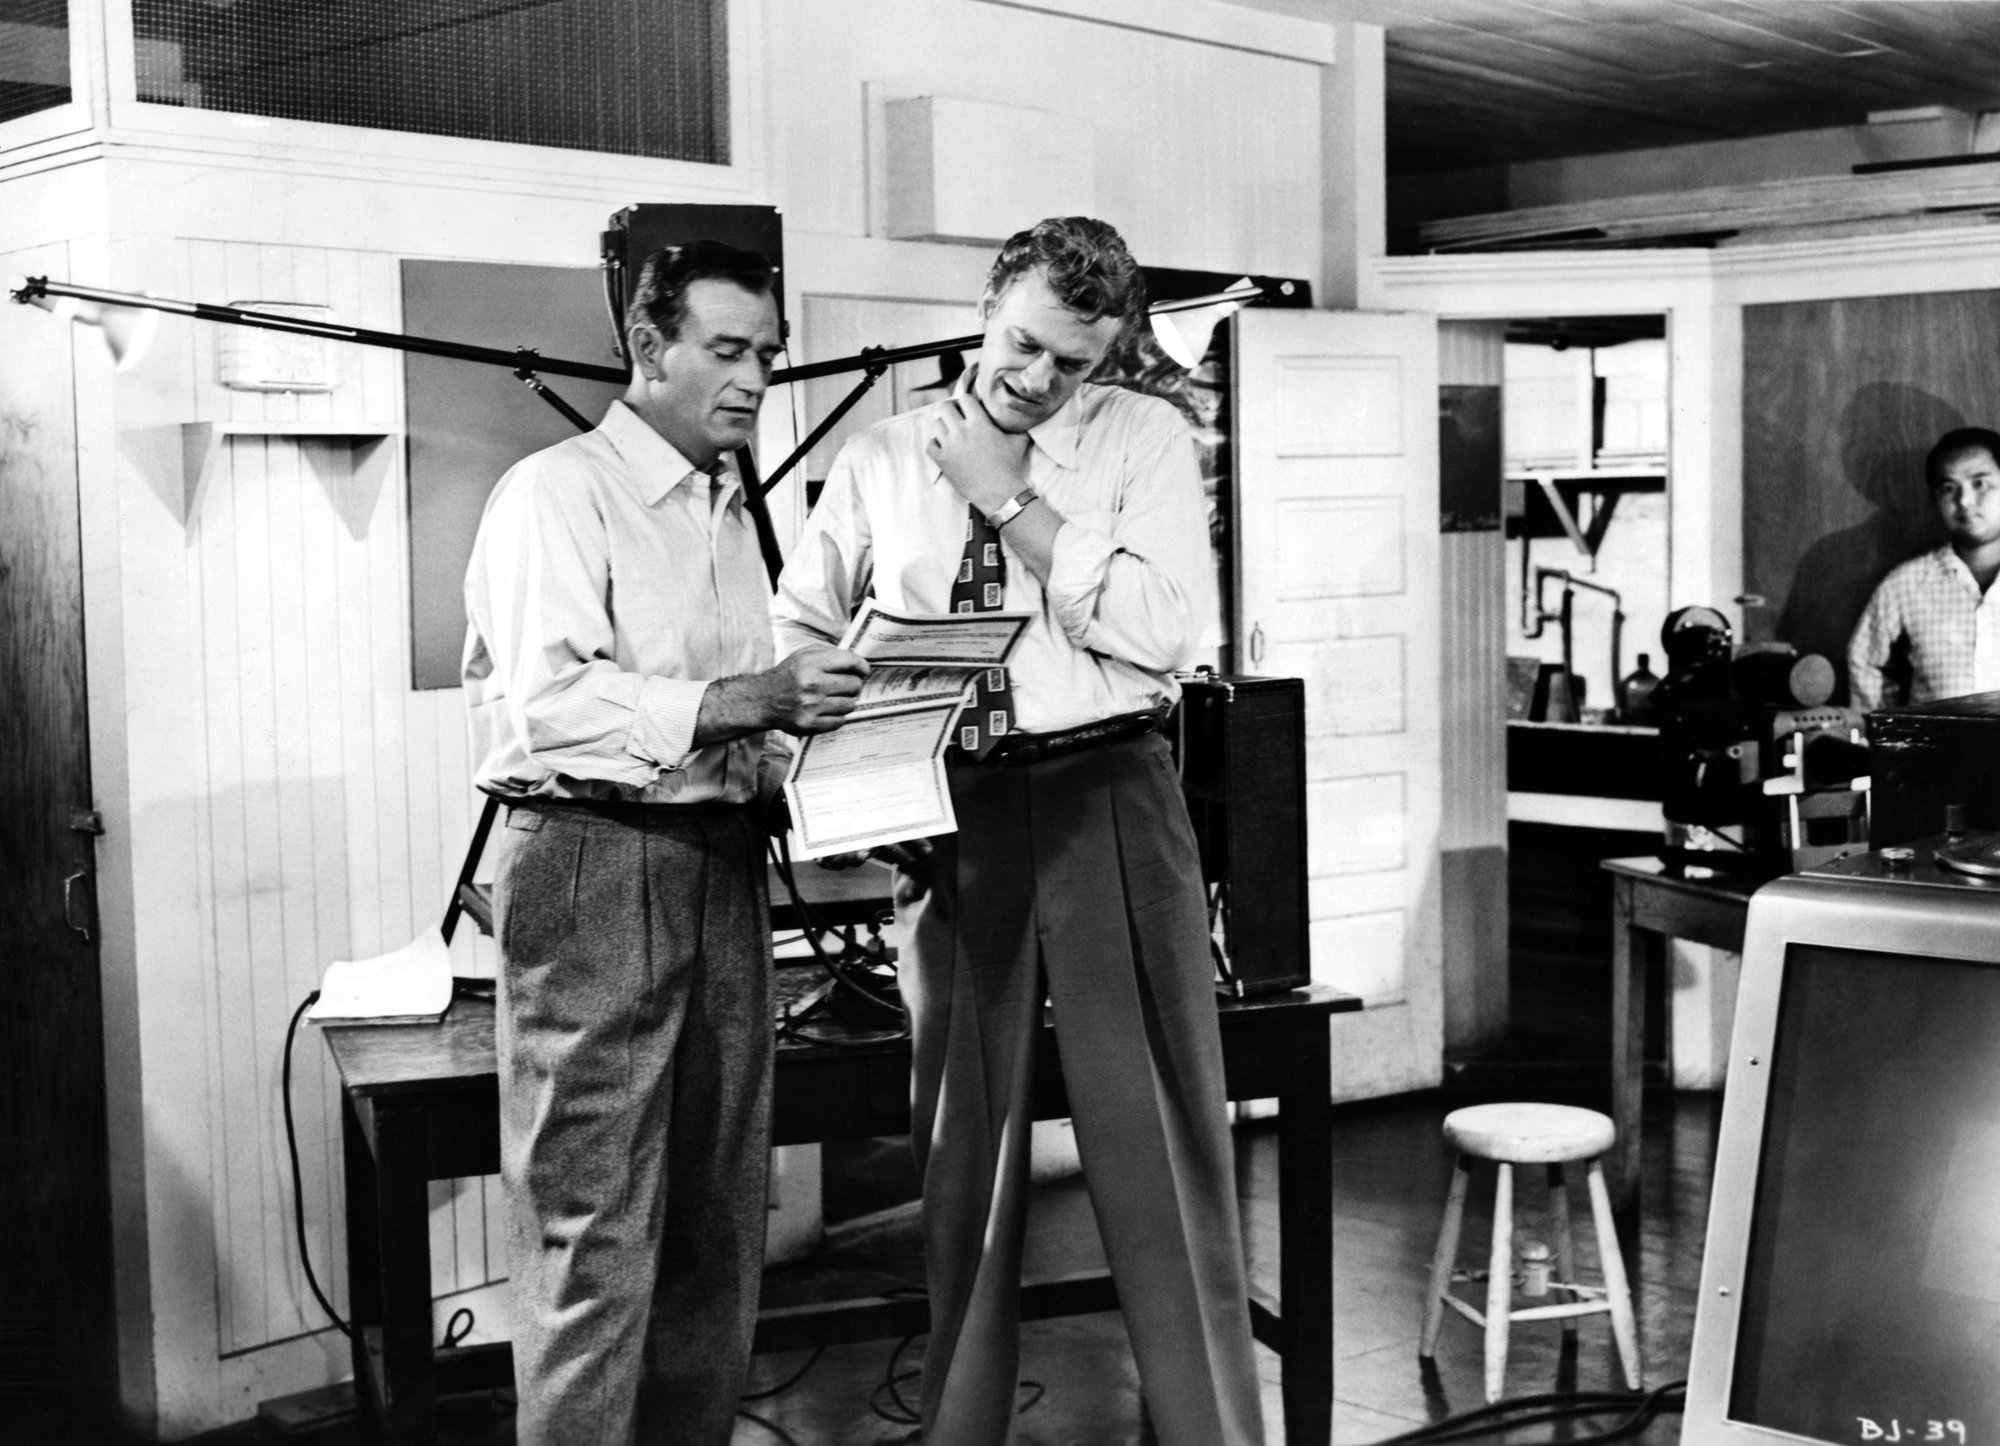 John Wayne and 'Gunsmoke' actor James Arness in a black-and-white photograph on the set of 'Big Jim McLain' wearing dress shirts and dress pants